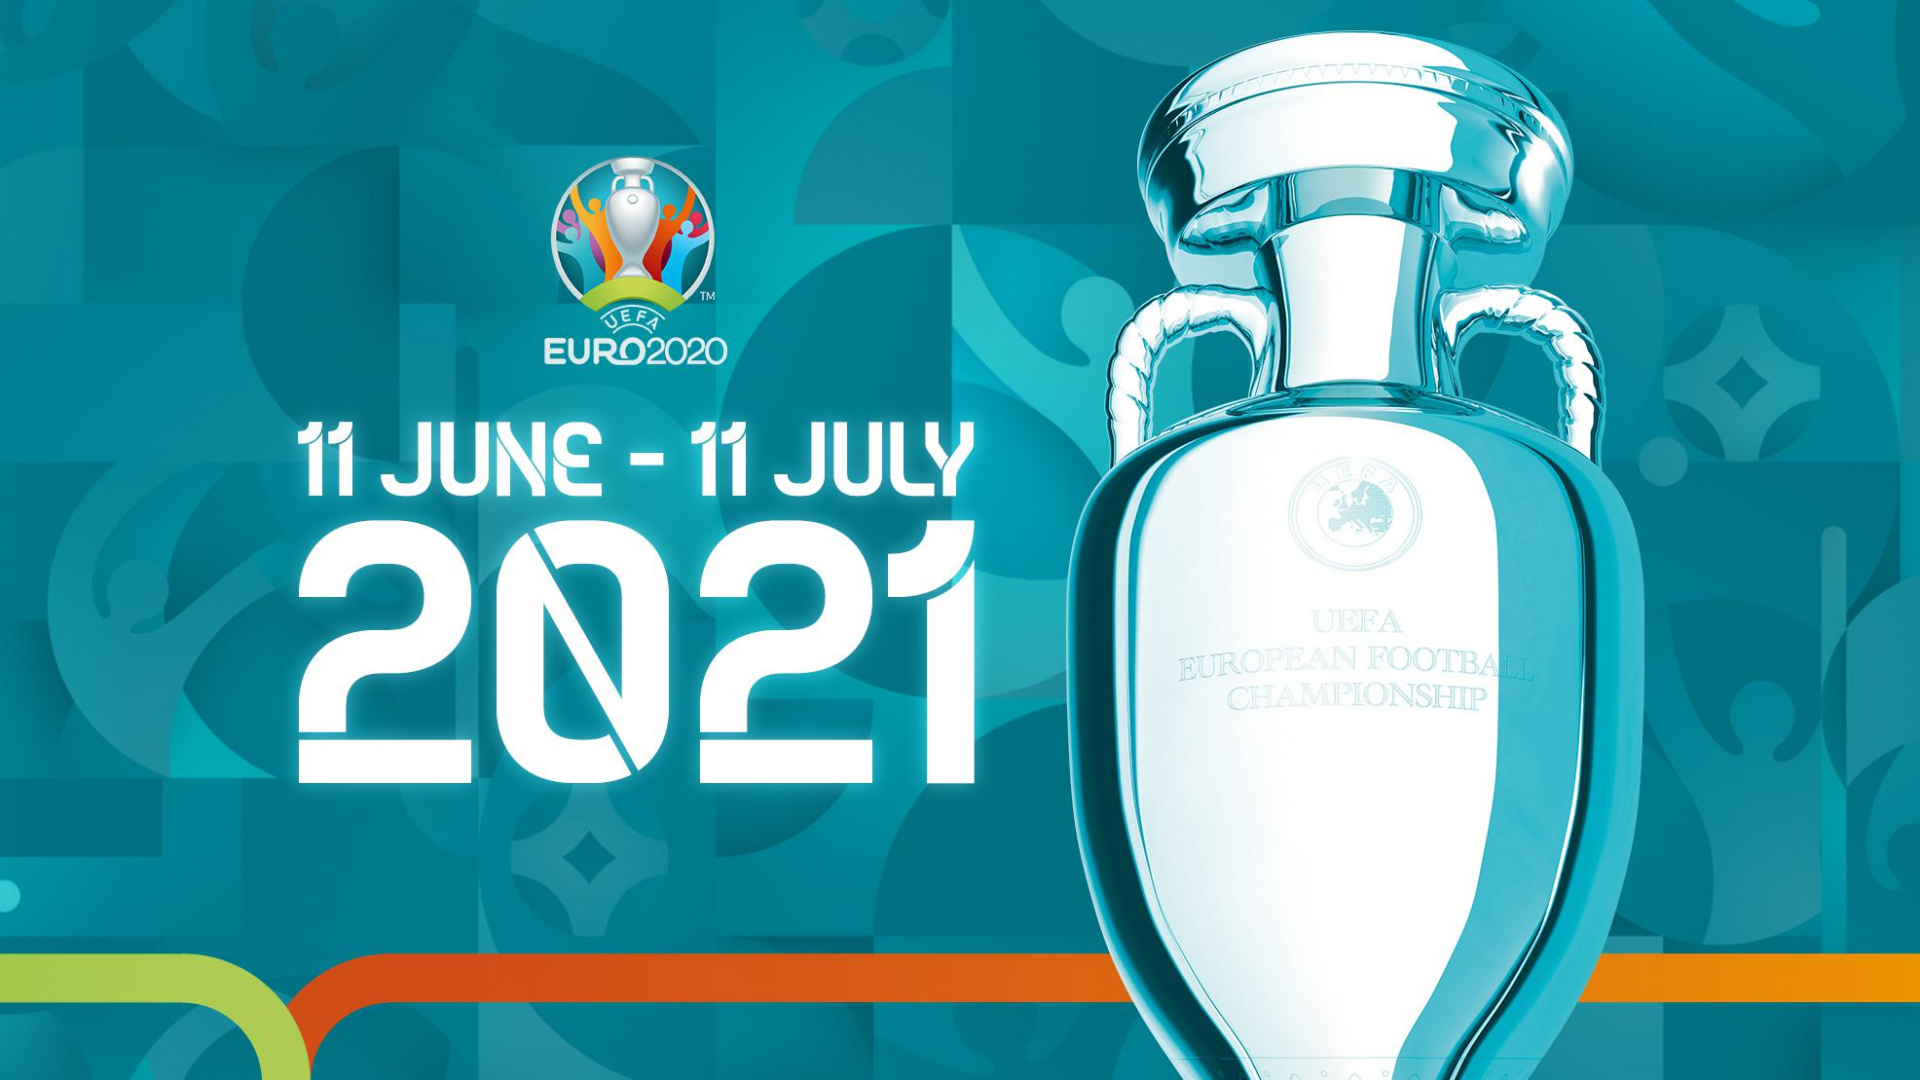 UEFA EURO 2020 match schedule: fixtures, venues and 2021 tournament